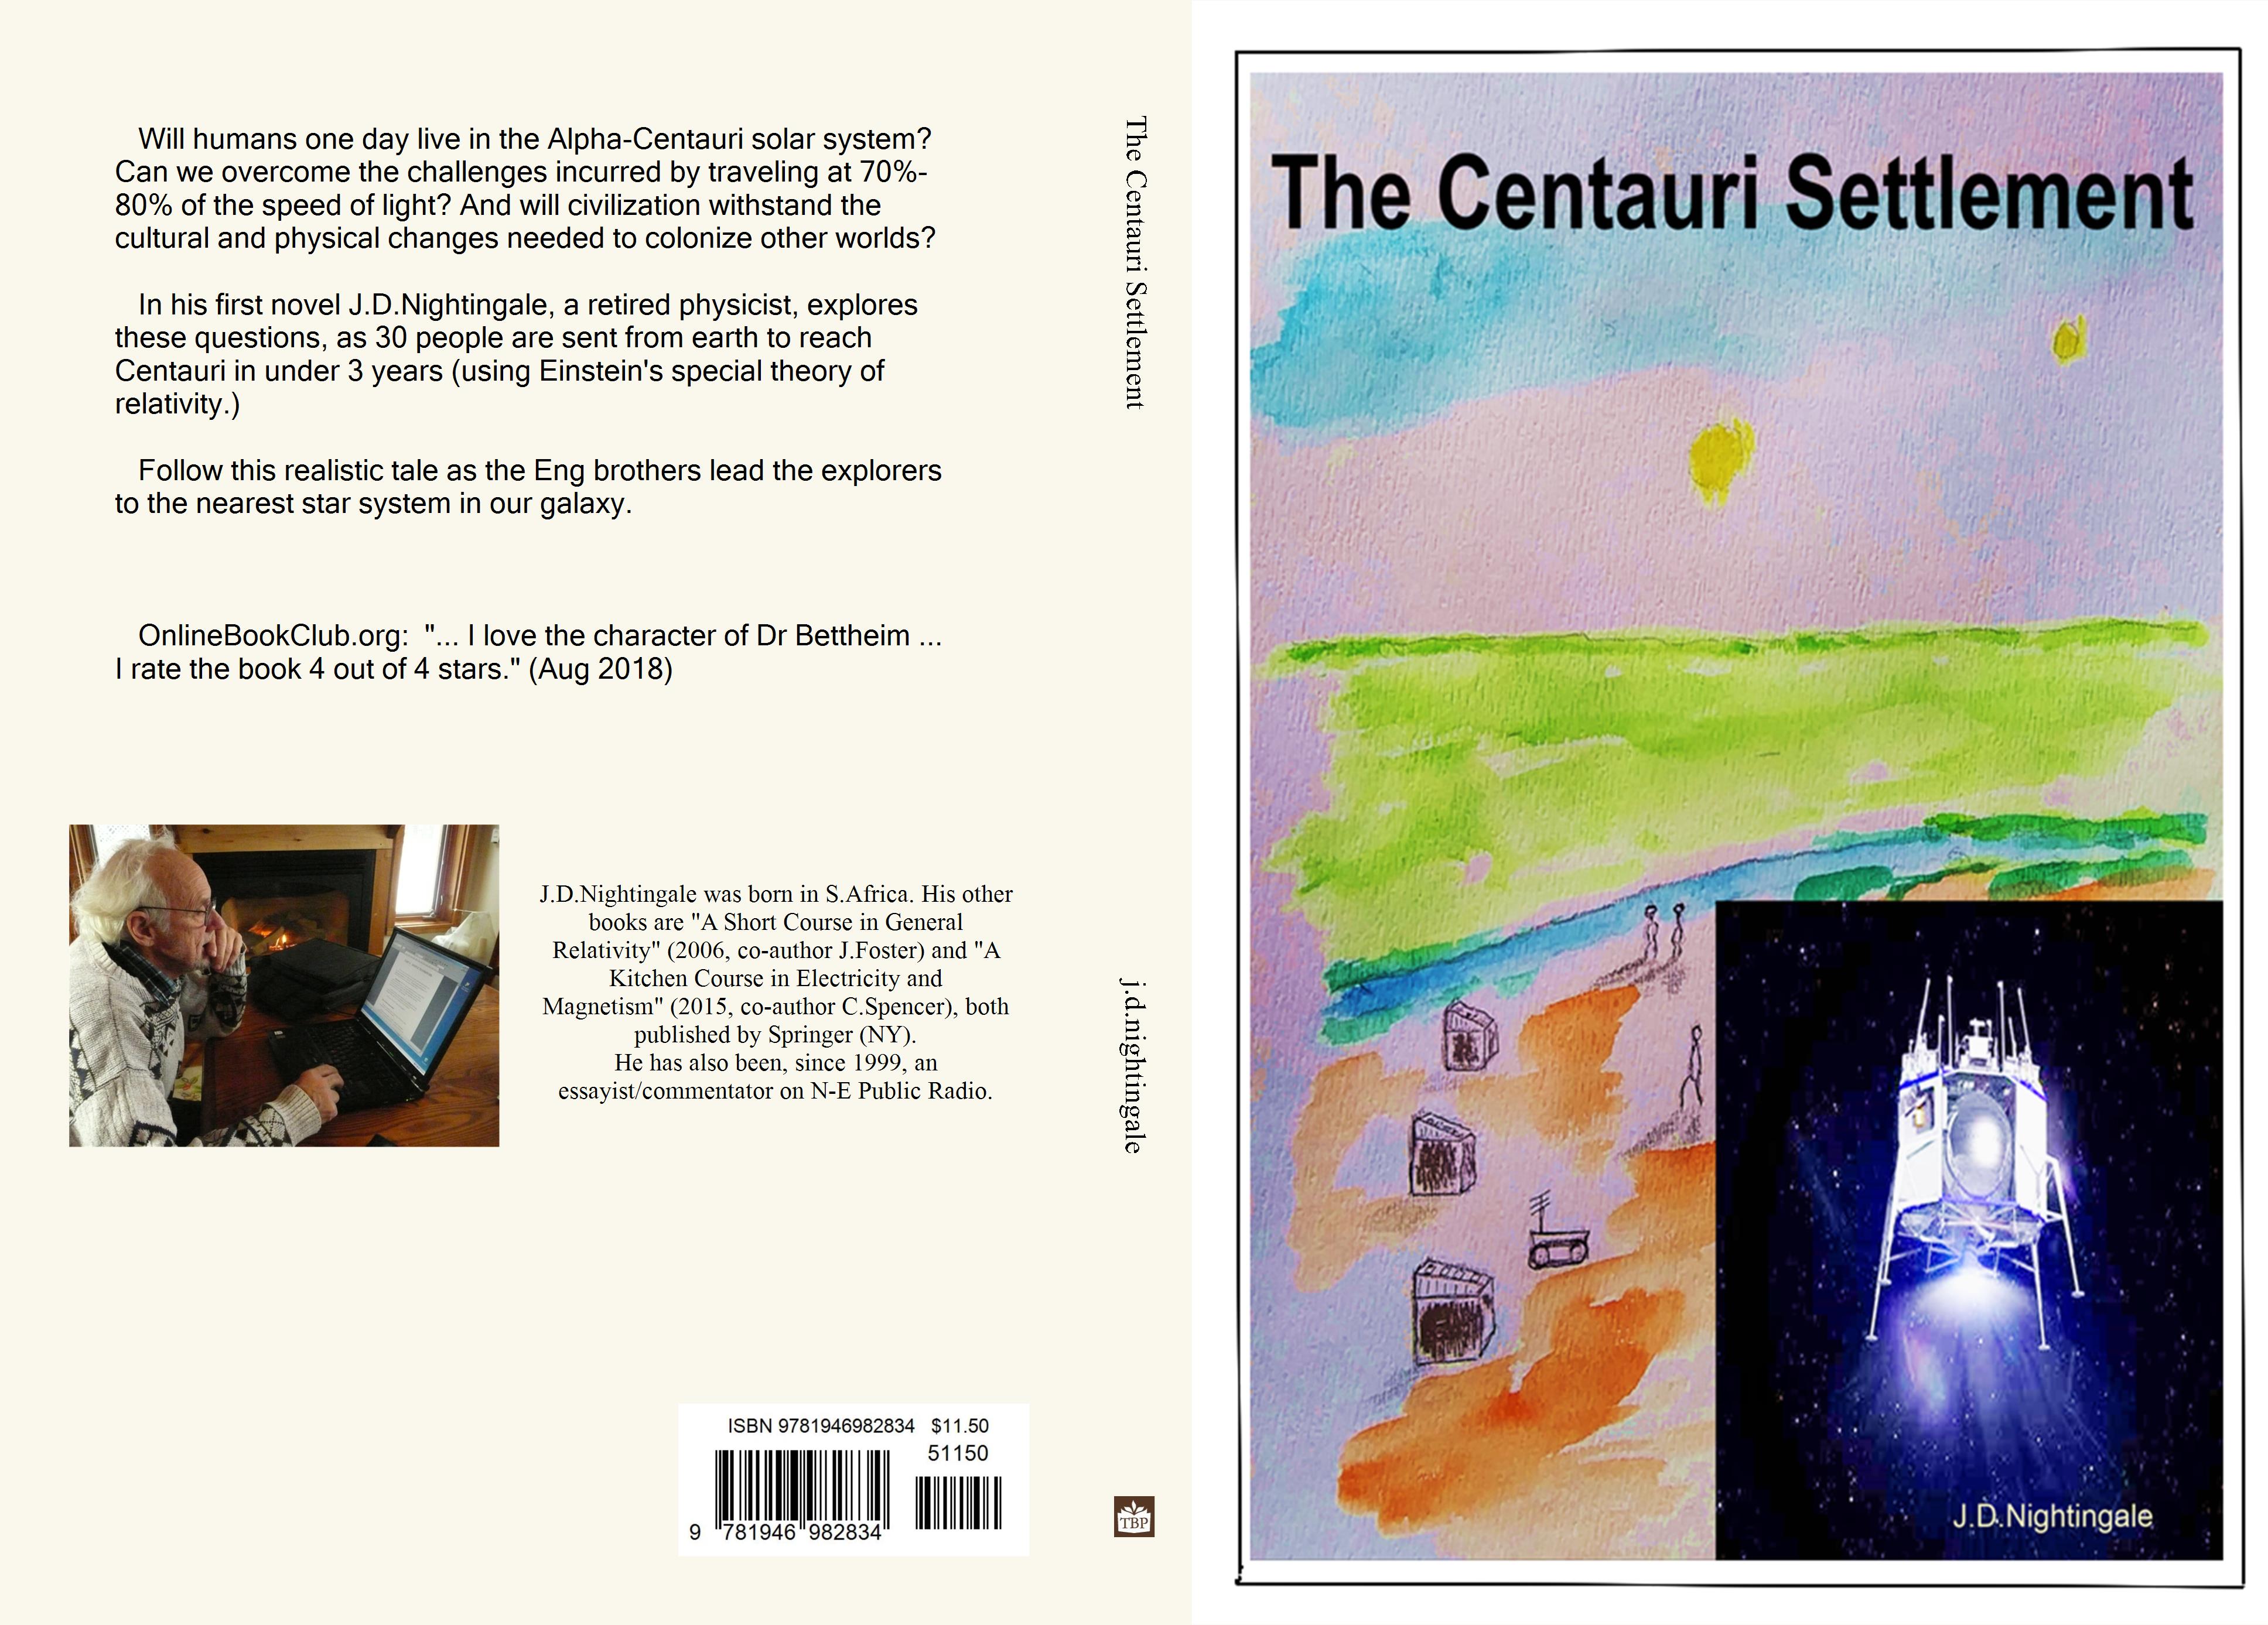 The Centauri Settlement cover image